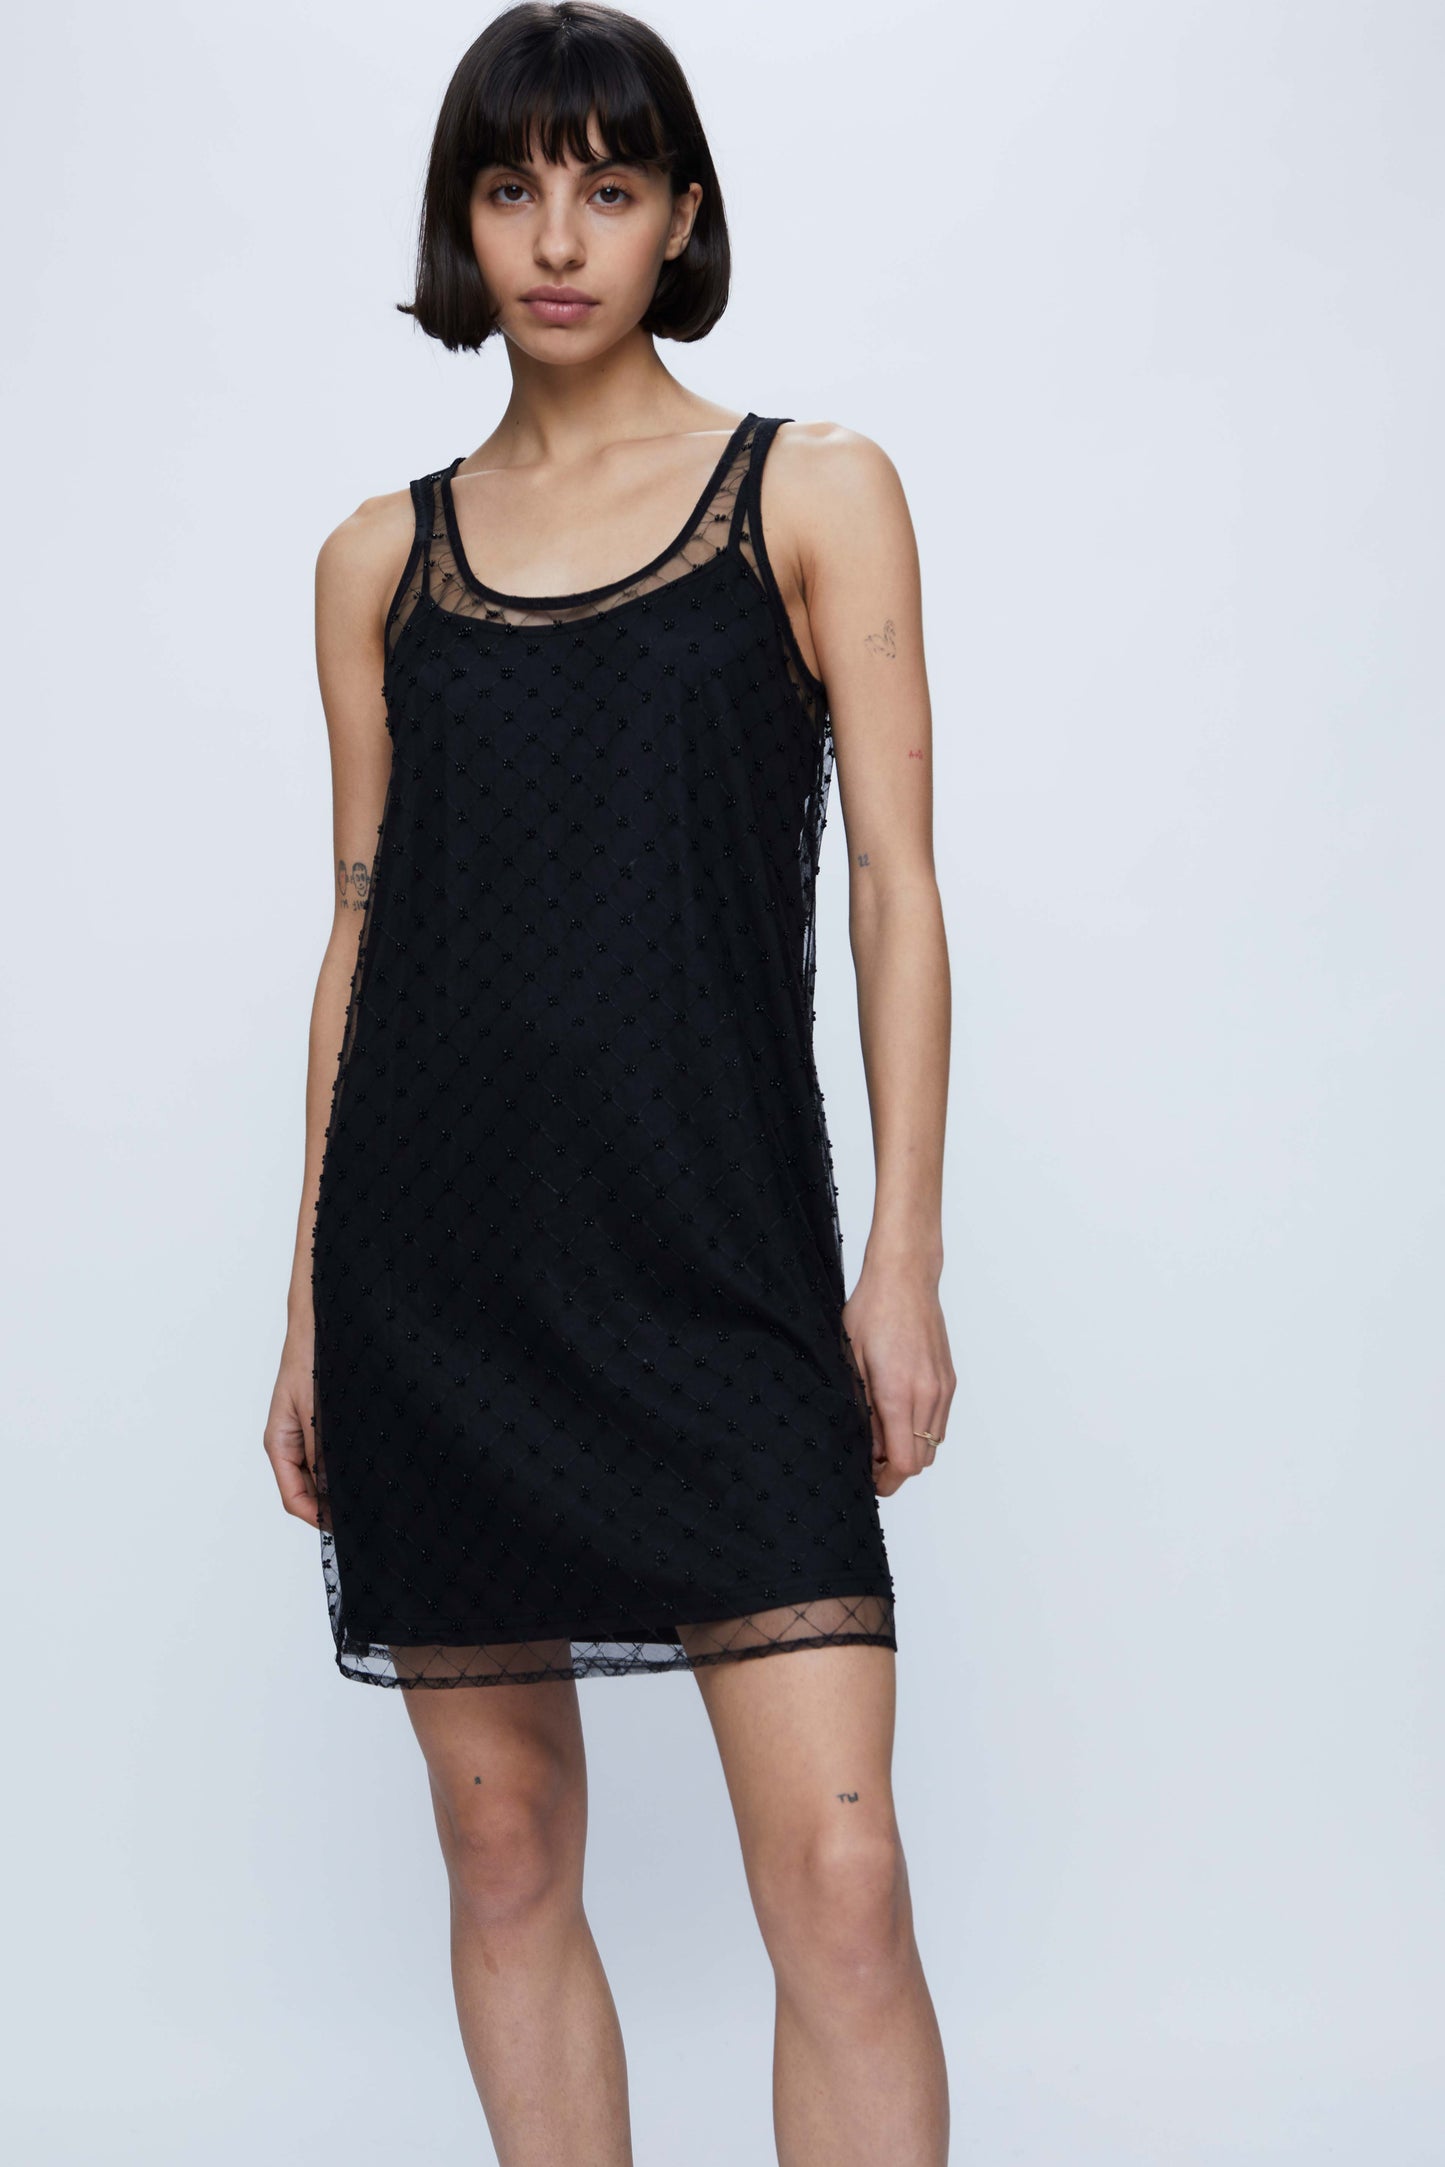 Short black lingerie dress with rhinestone mesh